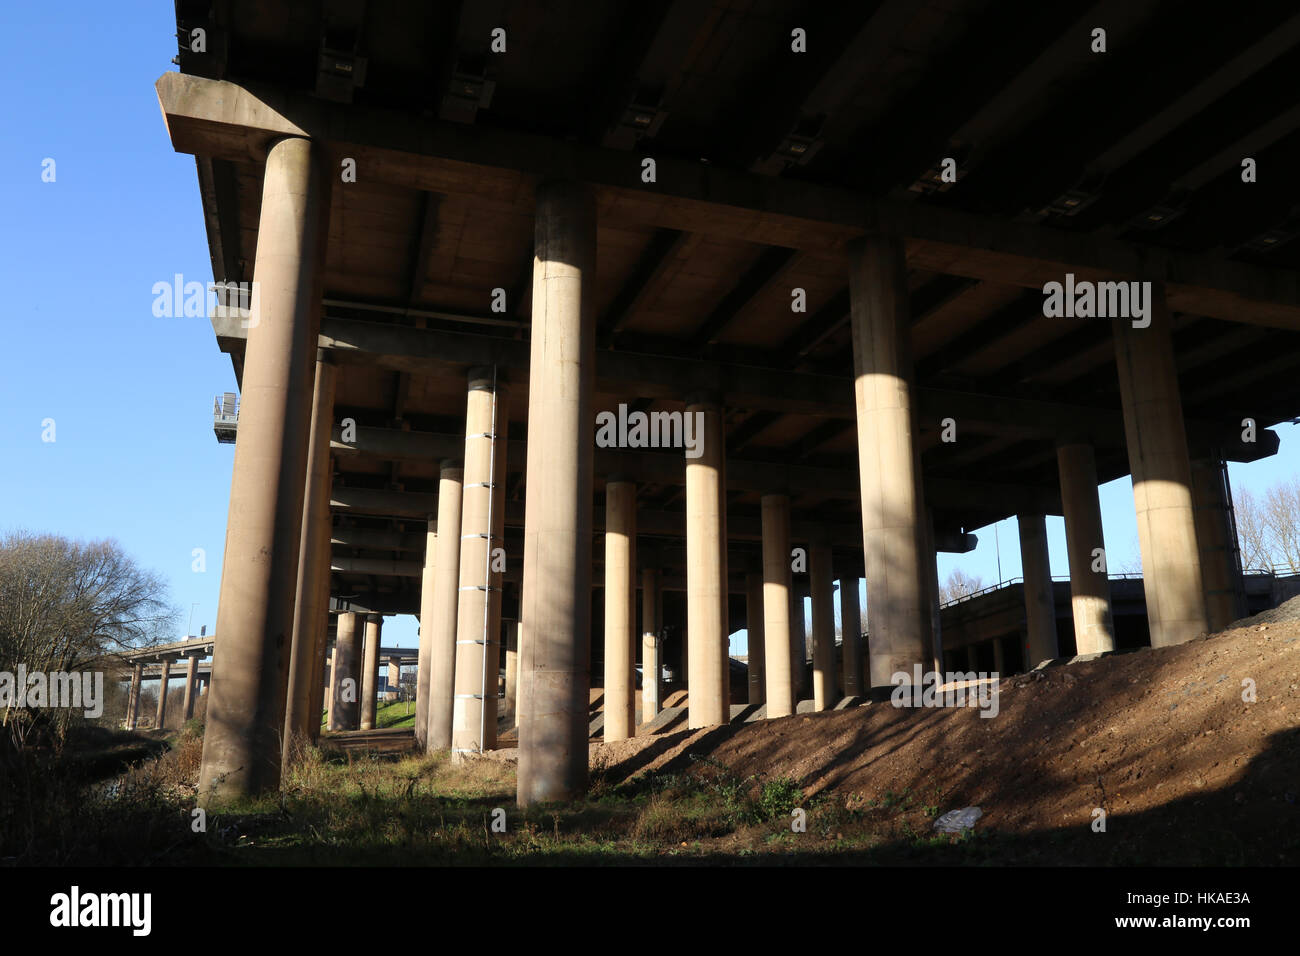 Underneath the elevated M6 motorway at Spaghetti Junction, Aston, Birmingham, United Kingdom. Stock Photo